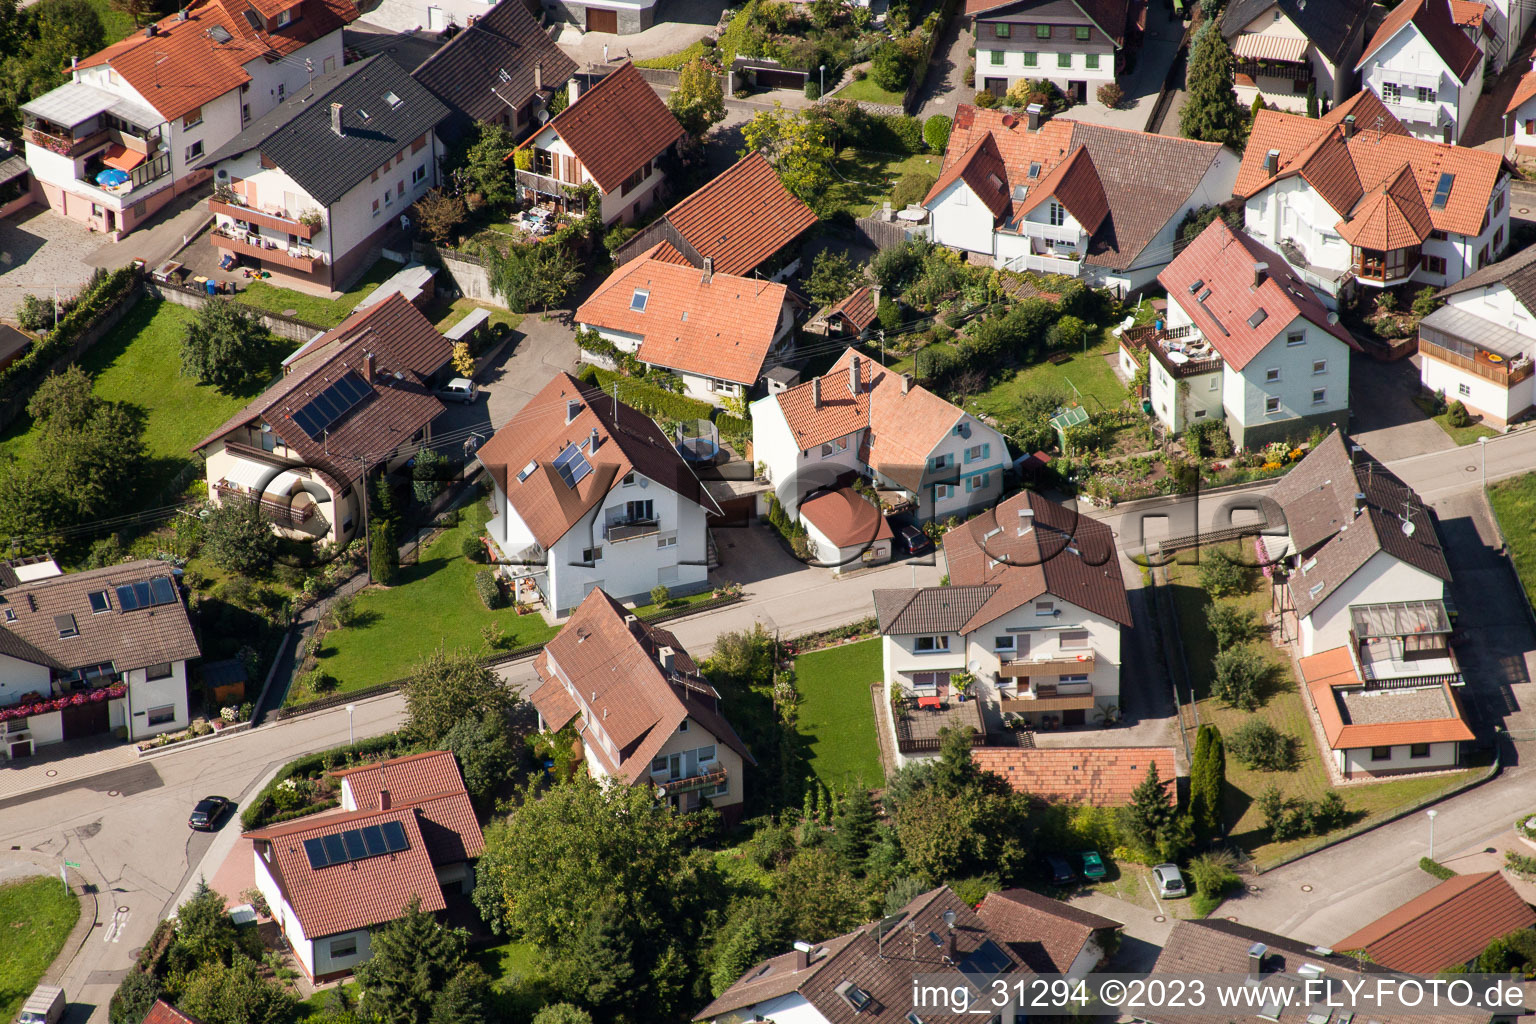 Aerial view of District Varnhalt in Baden-Baden in the state Baden-Wuerttemberg, Germany